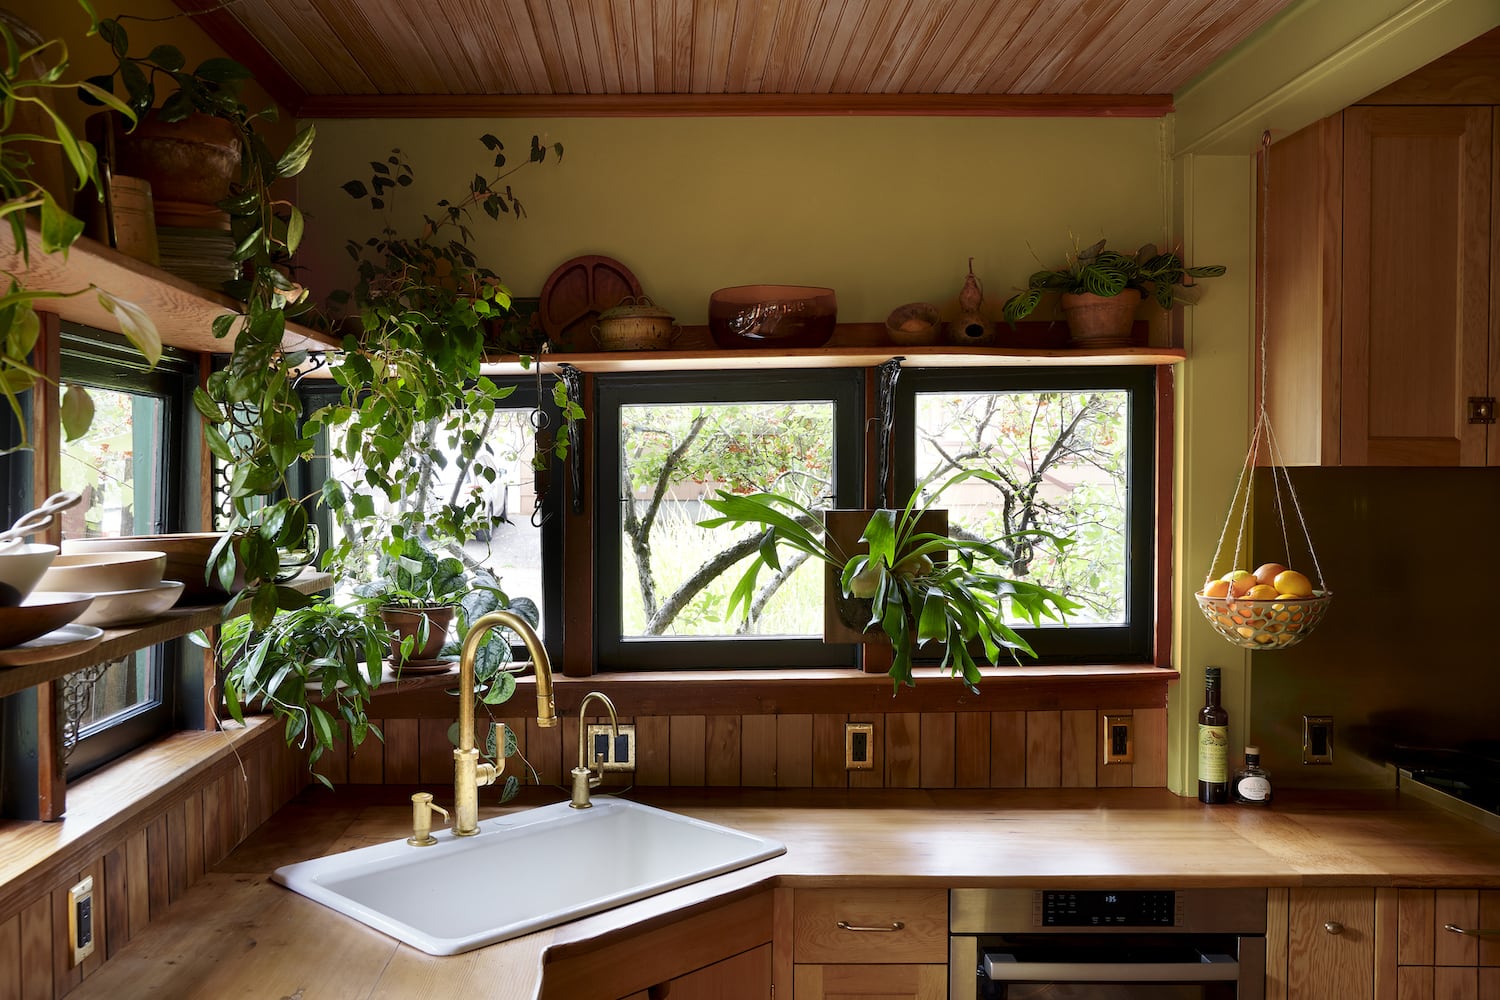 Northern California inspired wood kitchen remodel, living finish plumbing fixtures